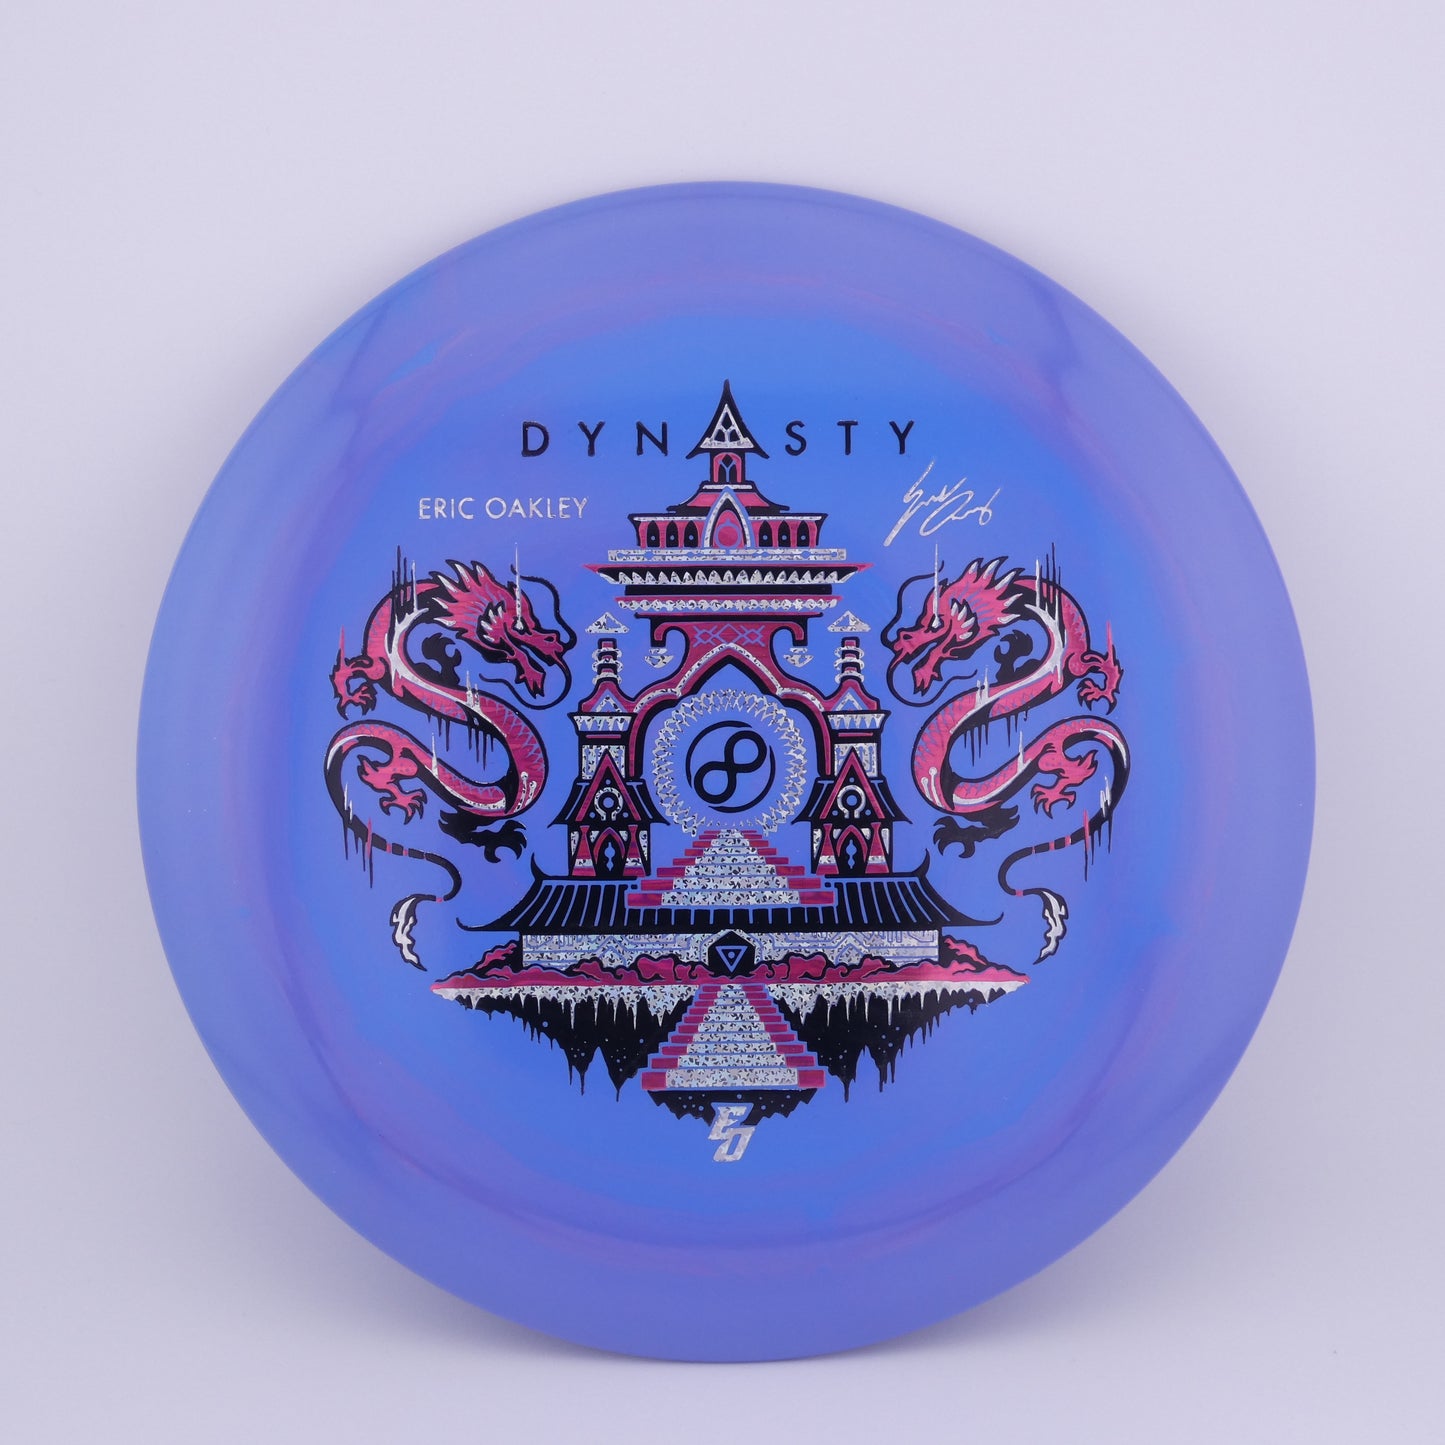 Swirly S Blend Dynasty Eric Okay Signature Series 173-175g